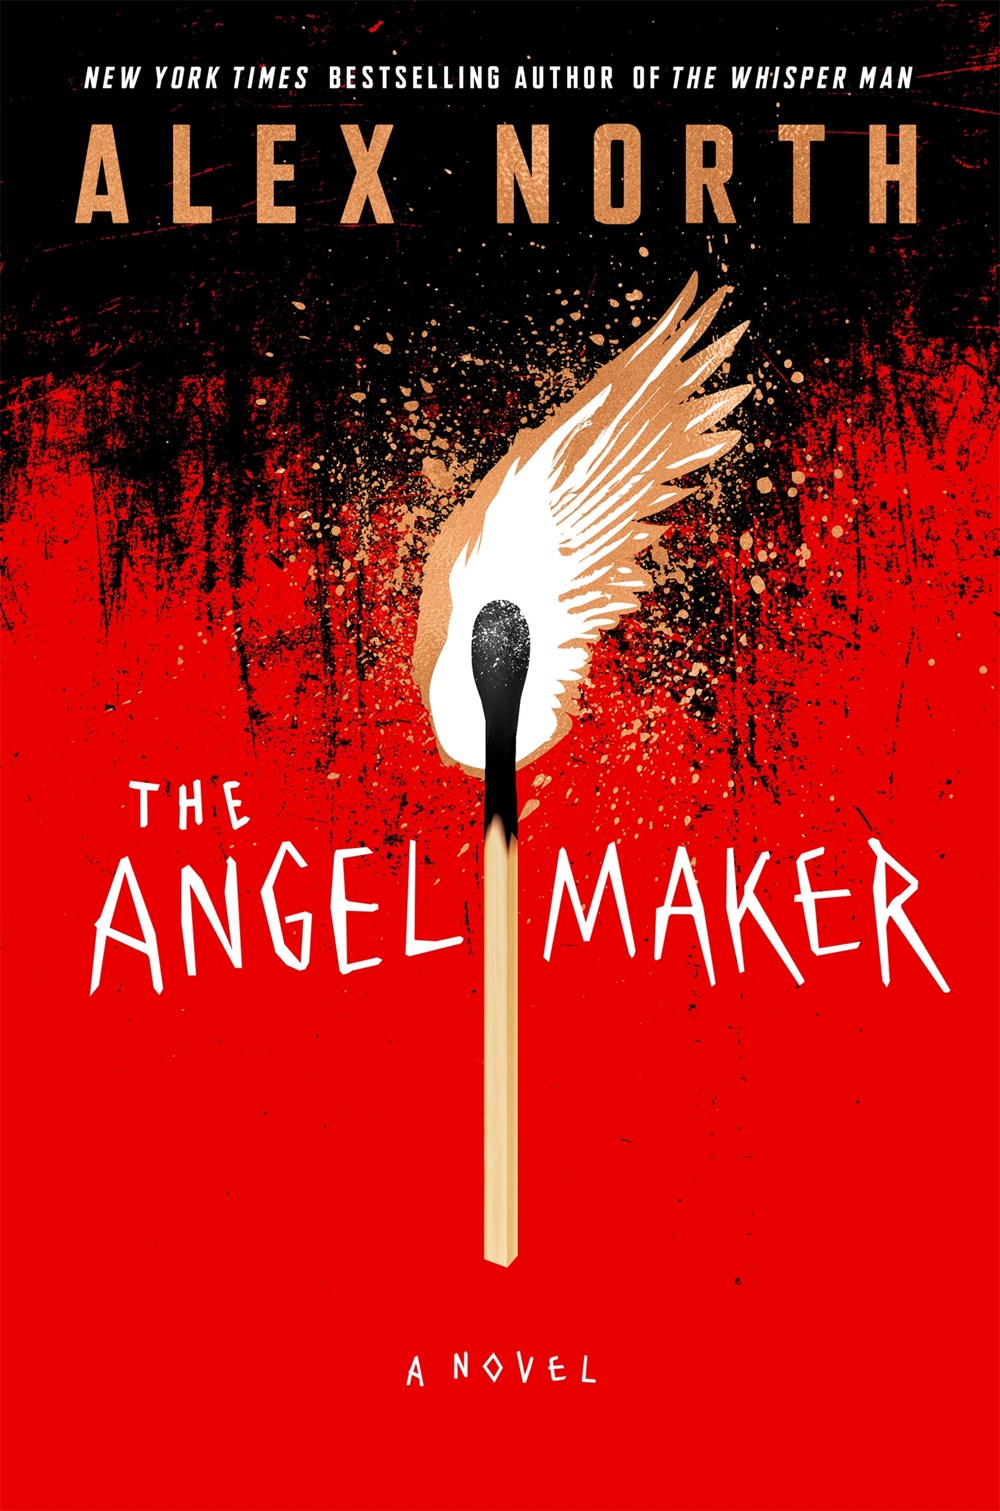 Image of "The Angel Maker"